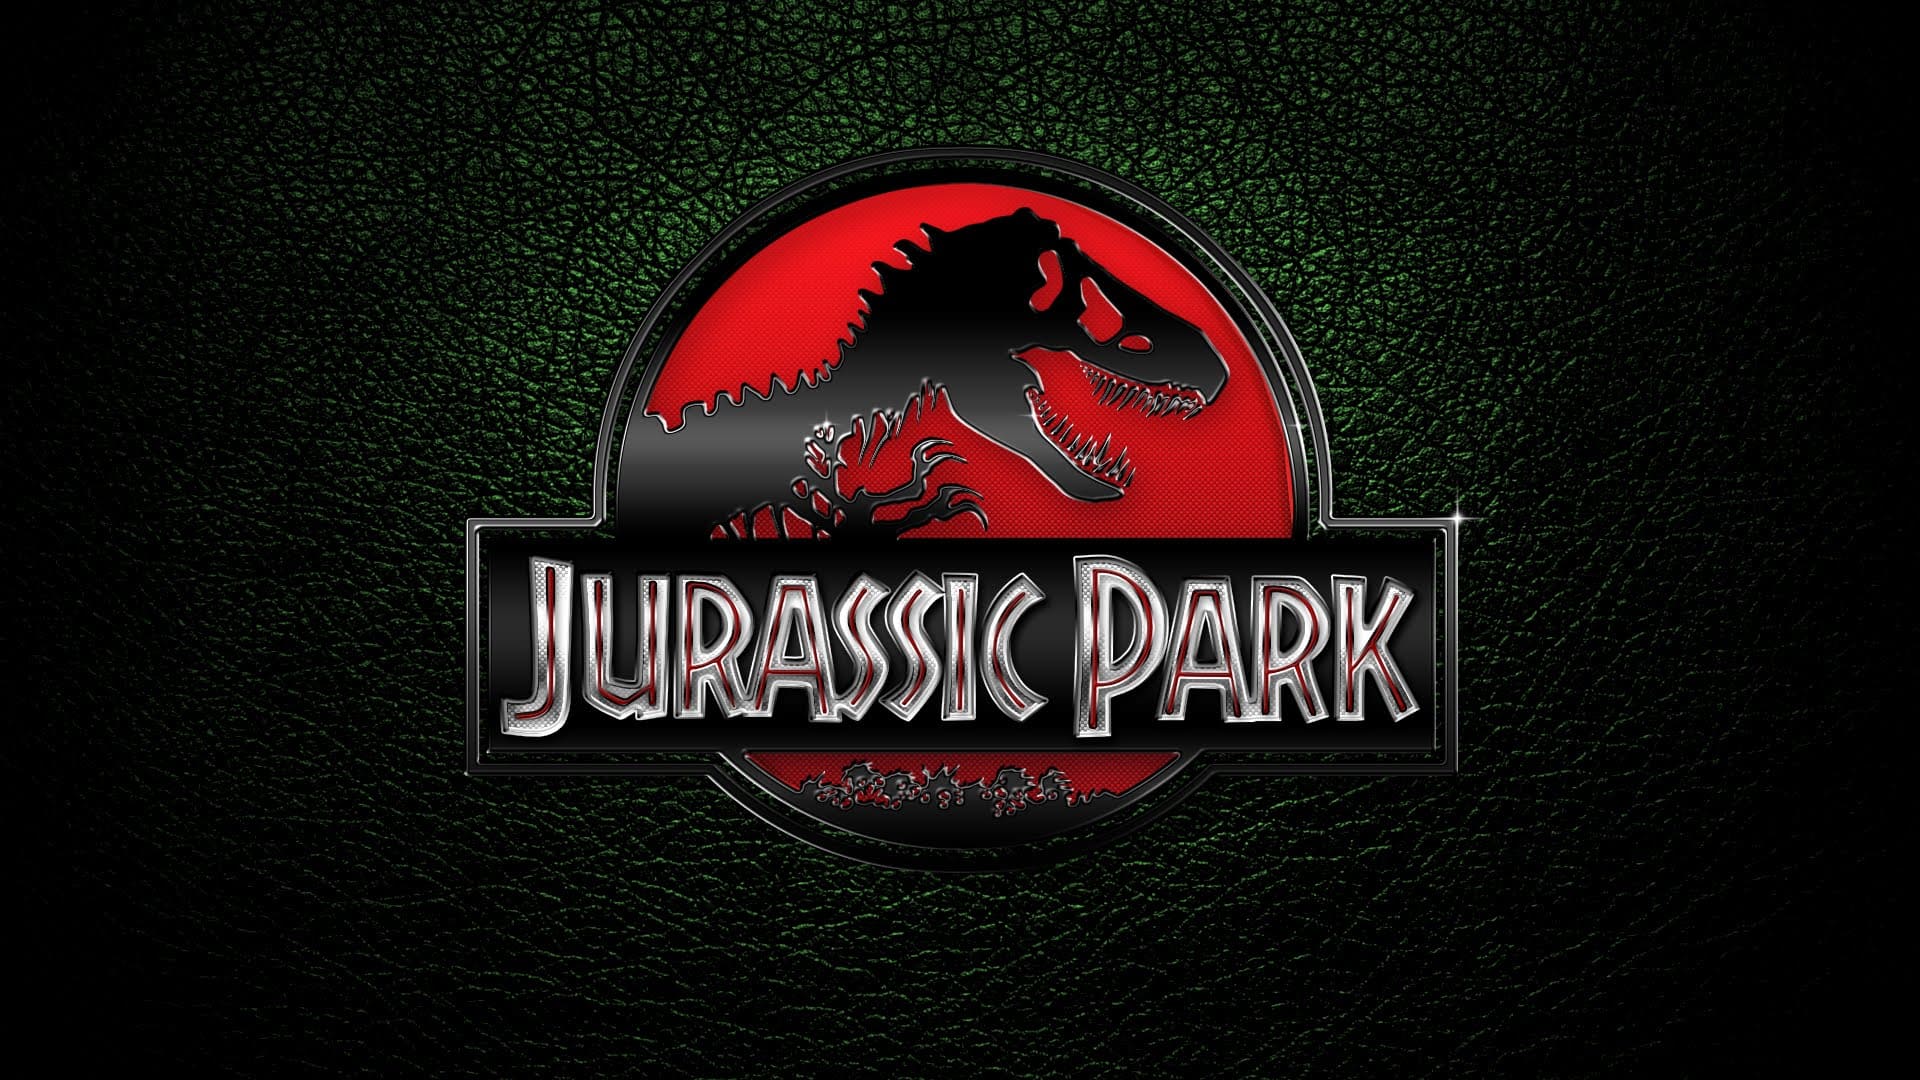 Jurassic Park 4K 1993 big poster